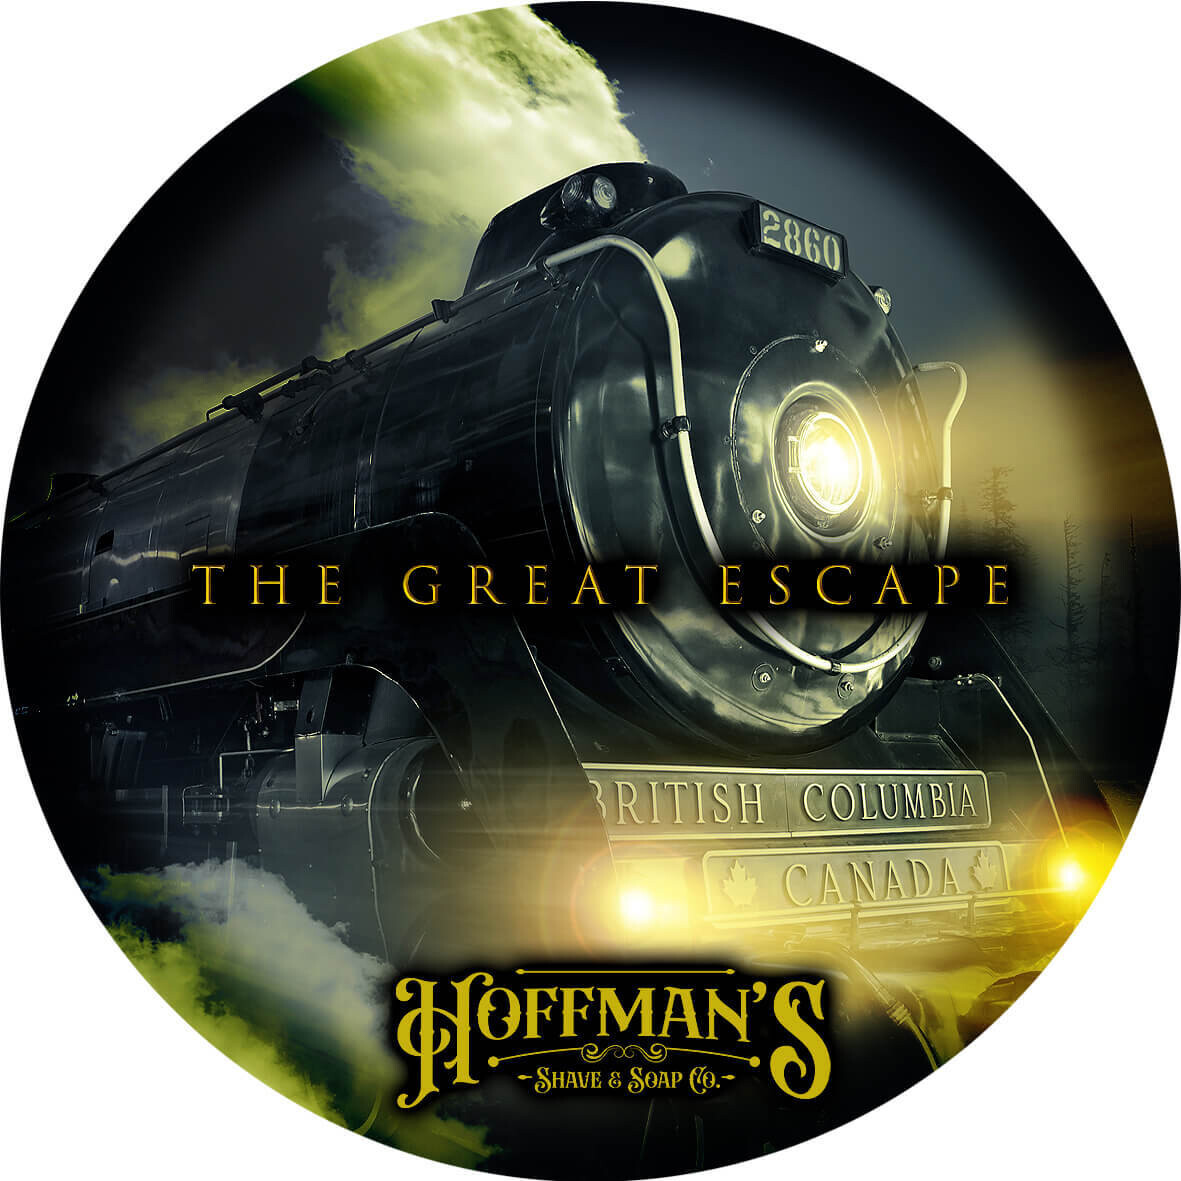 Hoffman's The Great Escape Artisan Shaving Soap